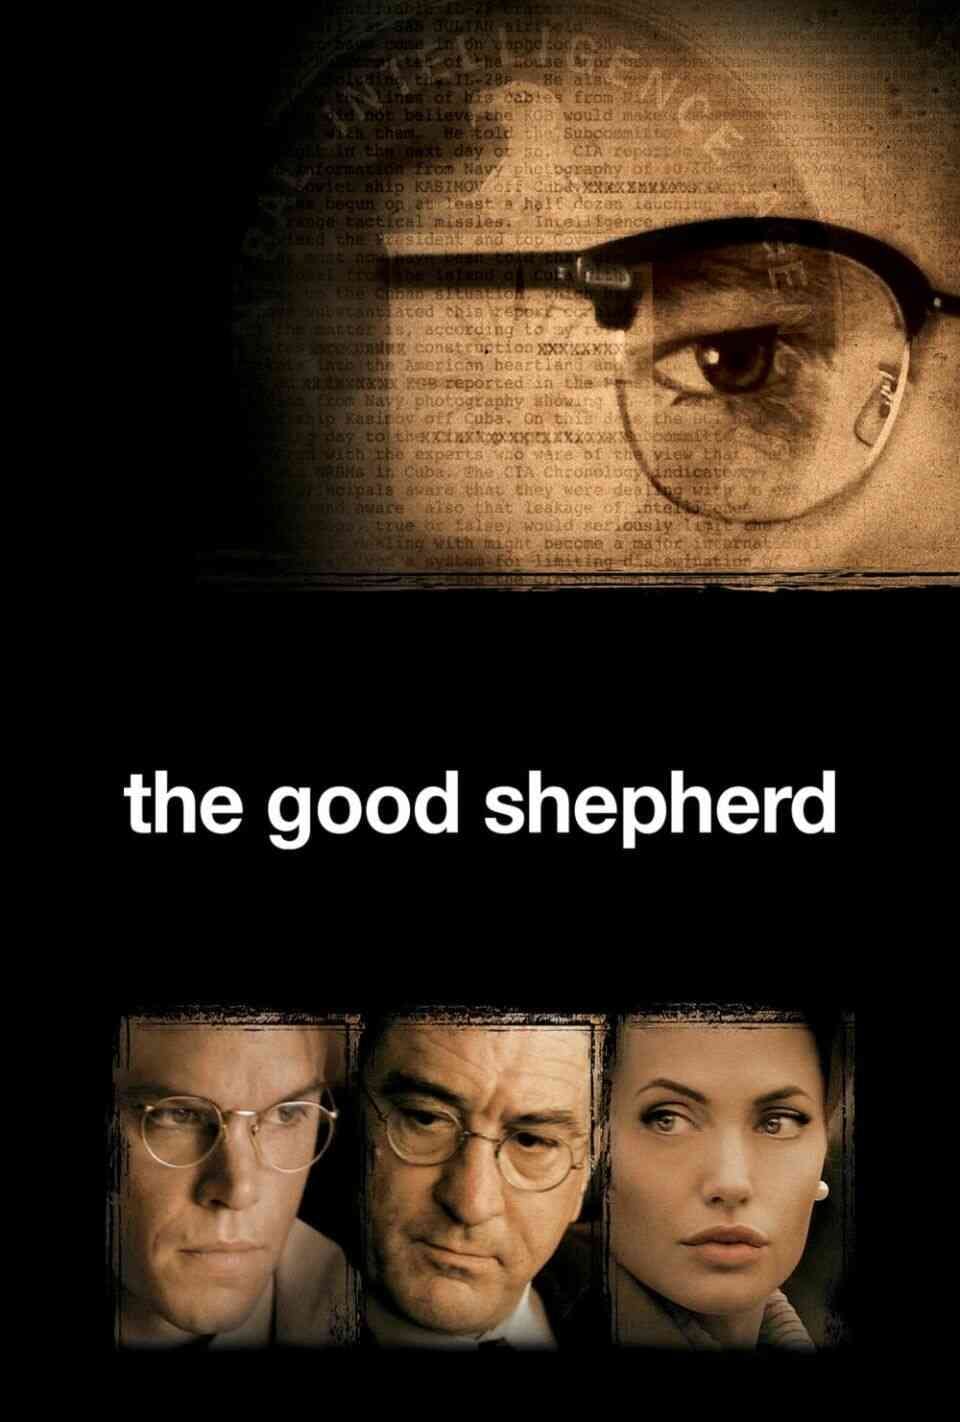 Read The Good Shepherd screenplay.